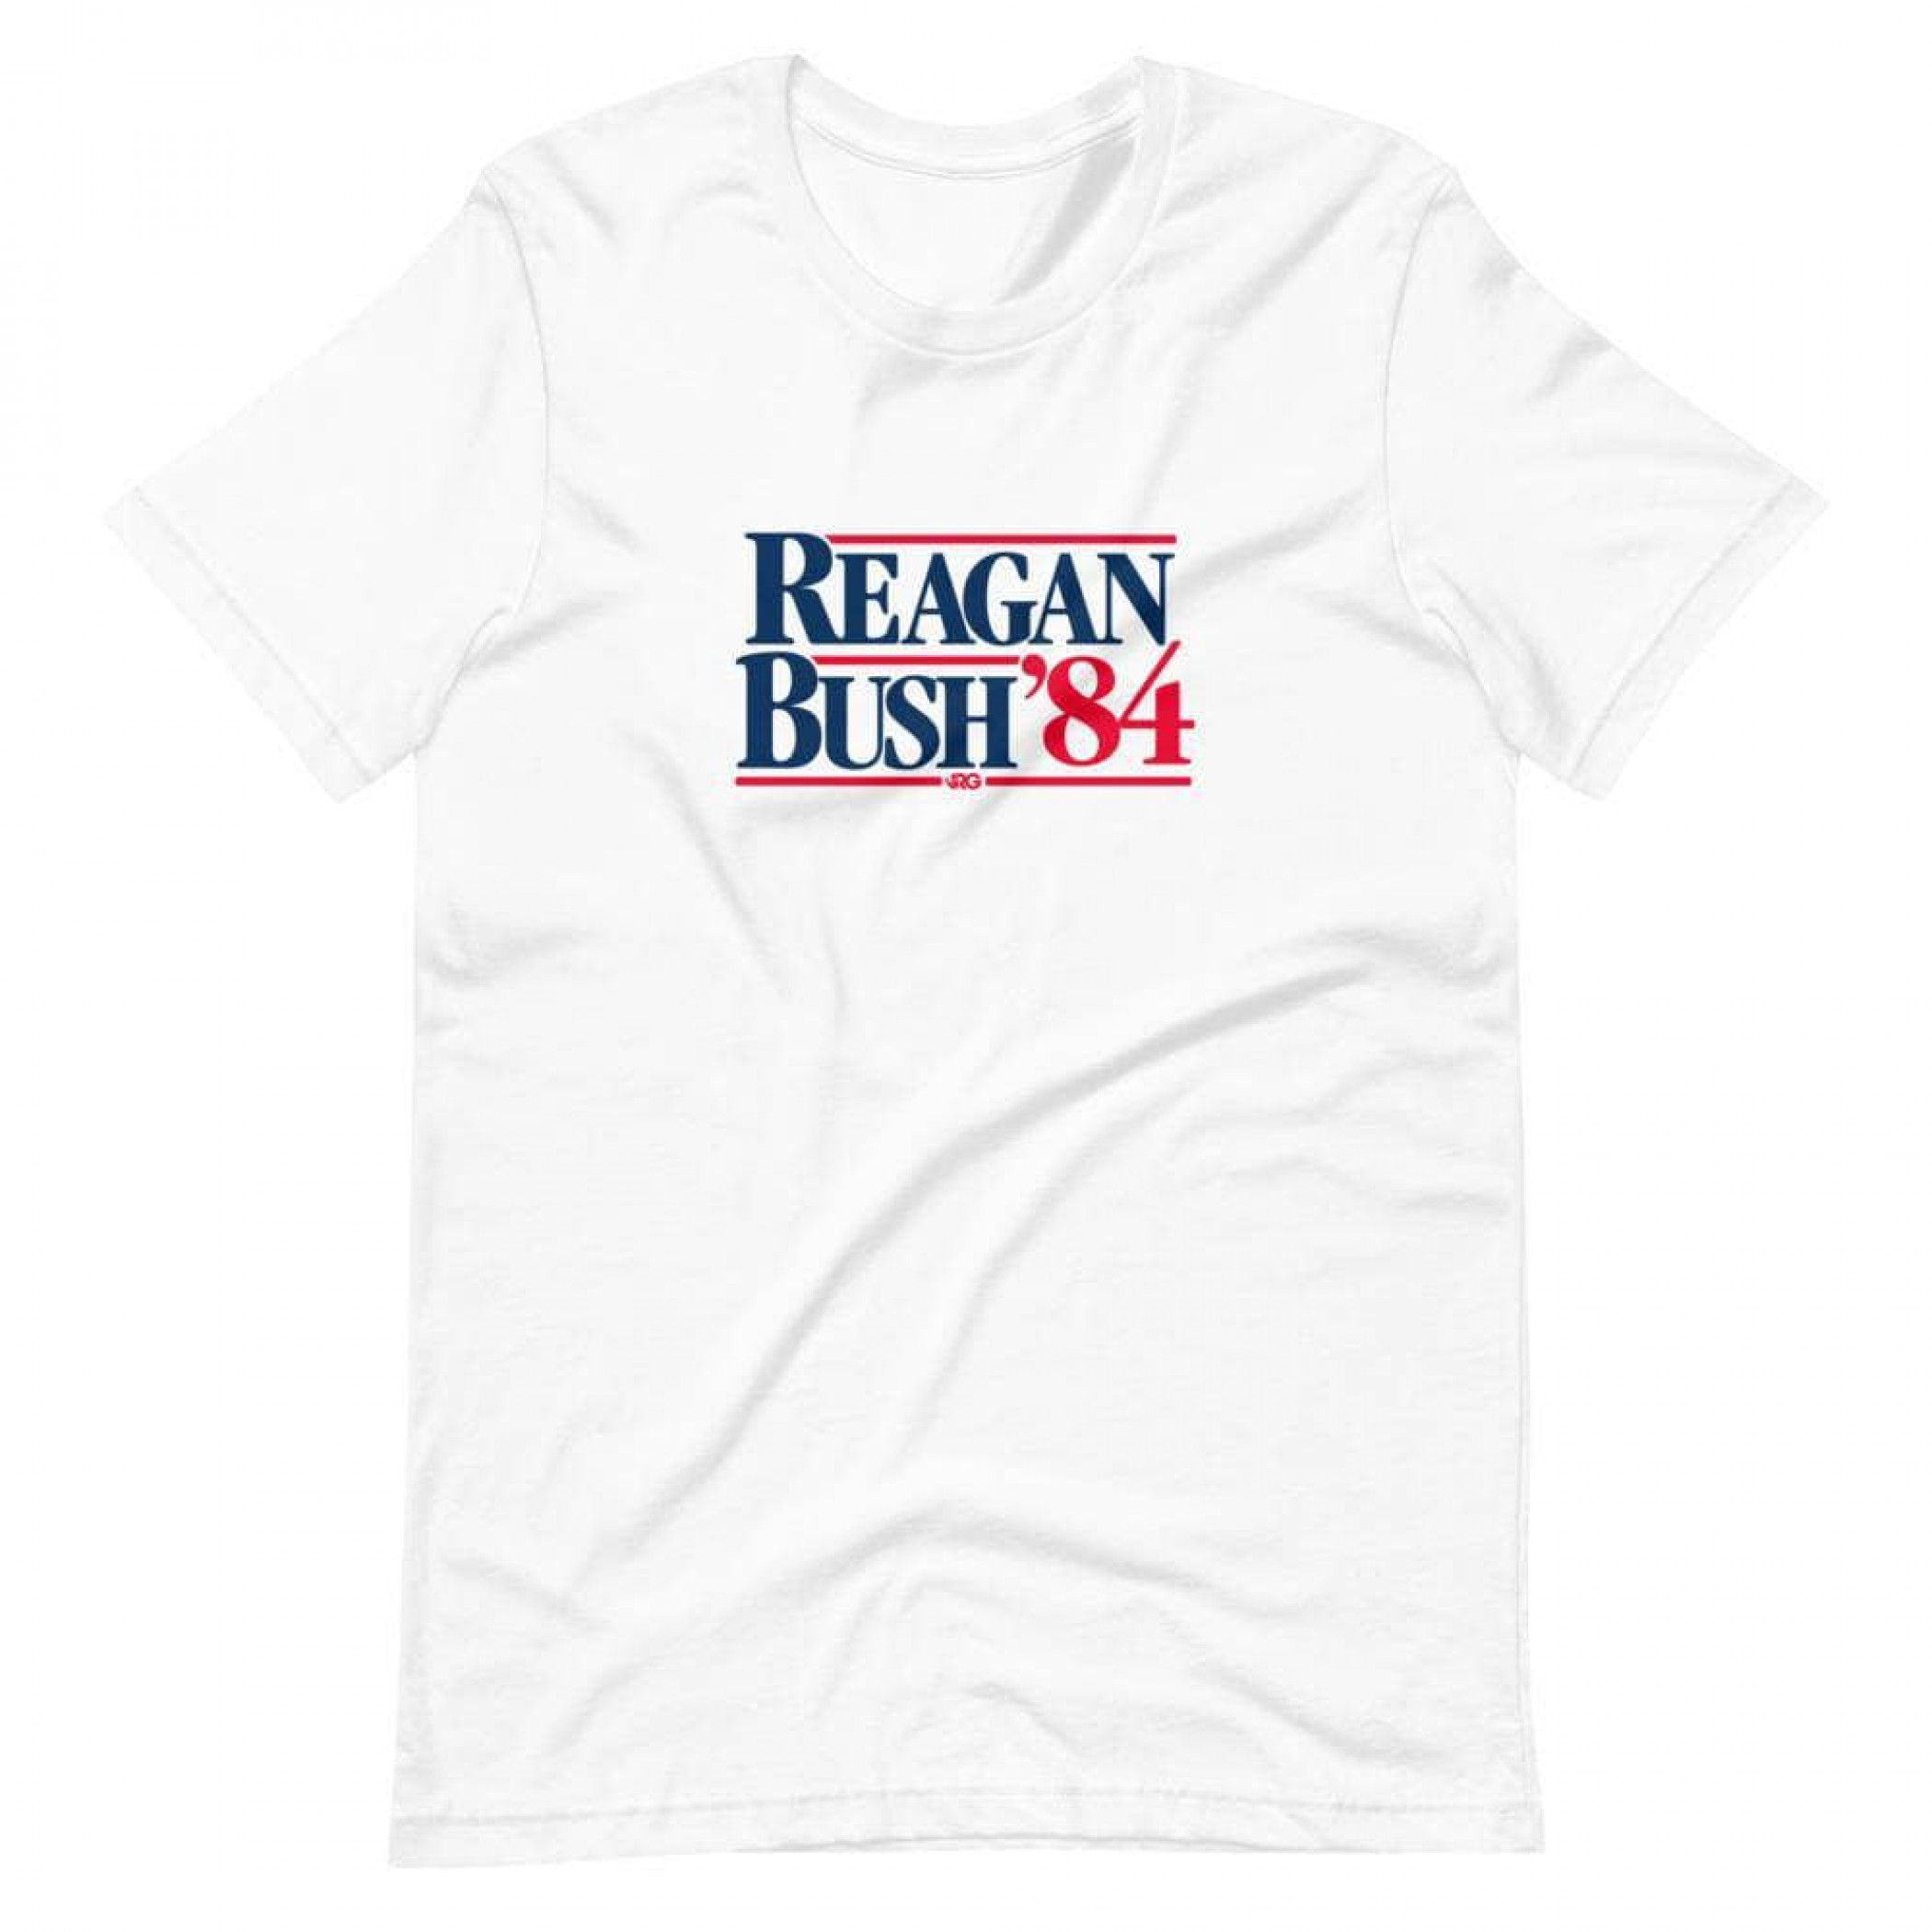 Reagan Bush '84 - White Tee